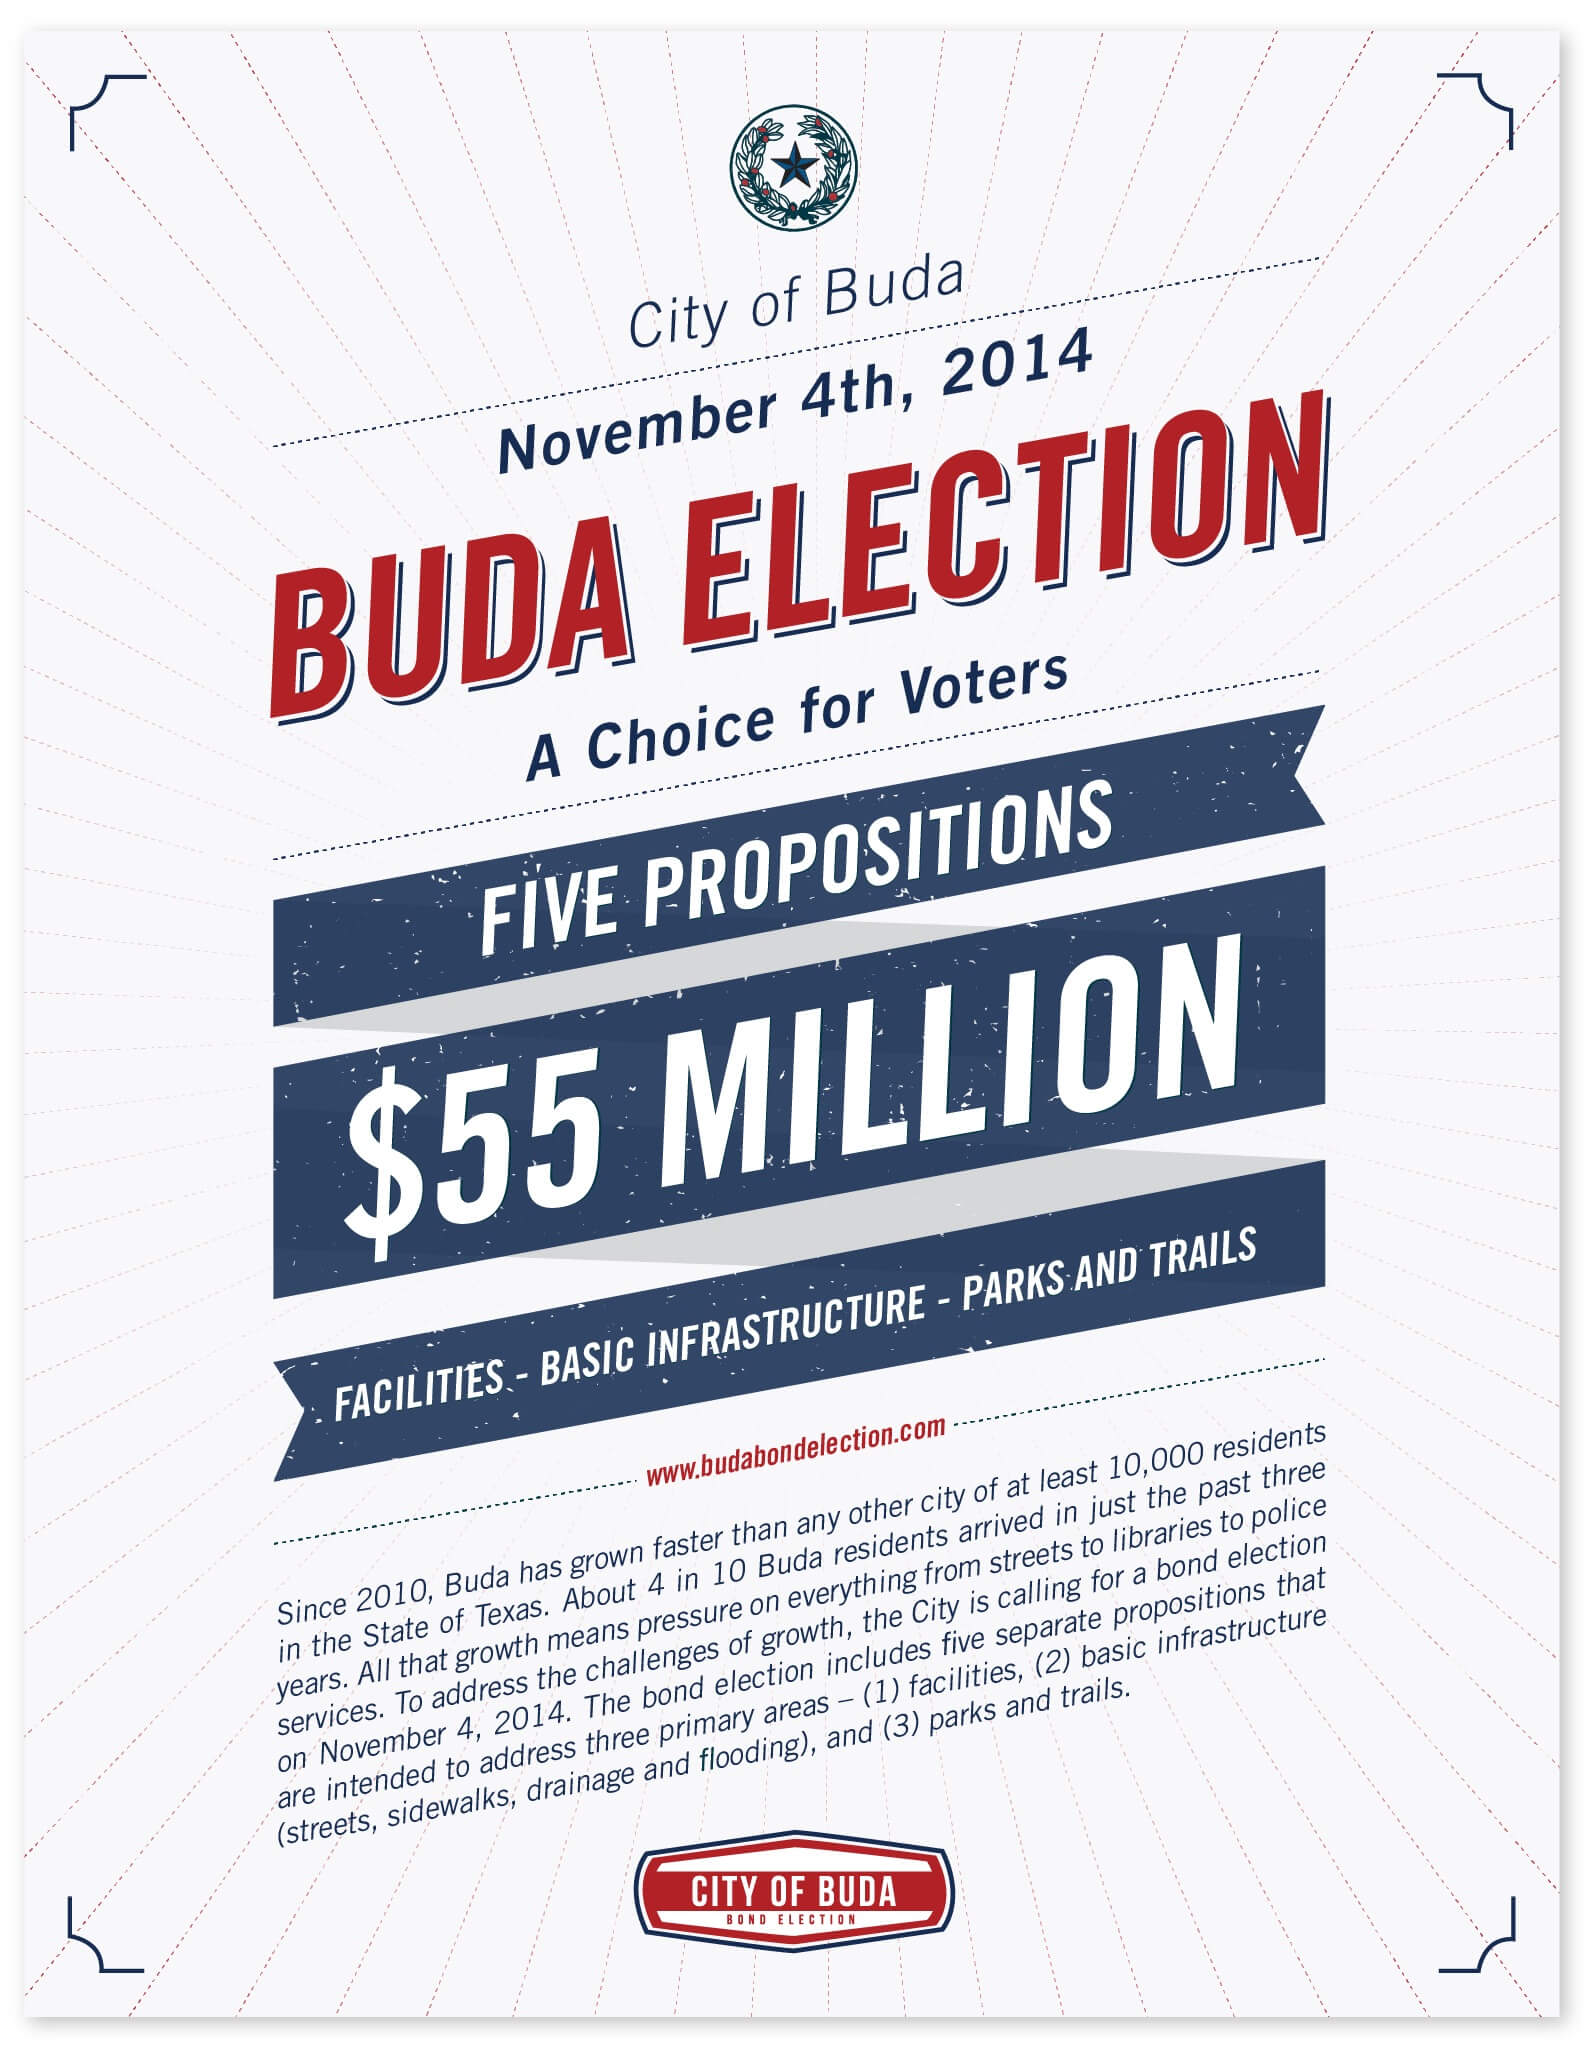 City of Buda Bond Election marketing flyer